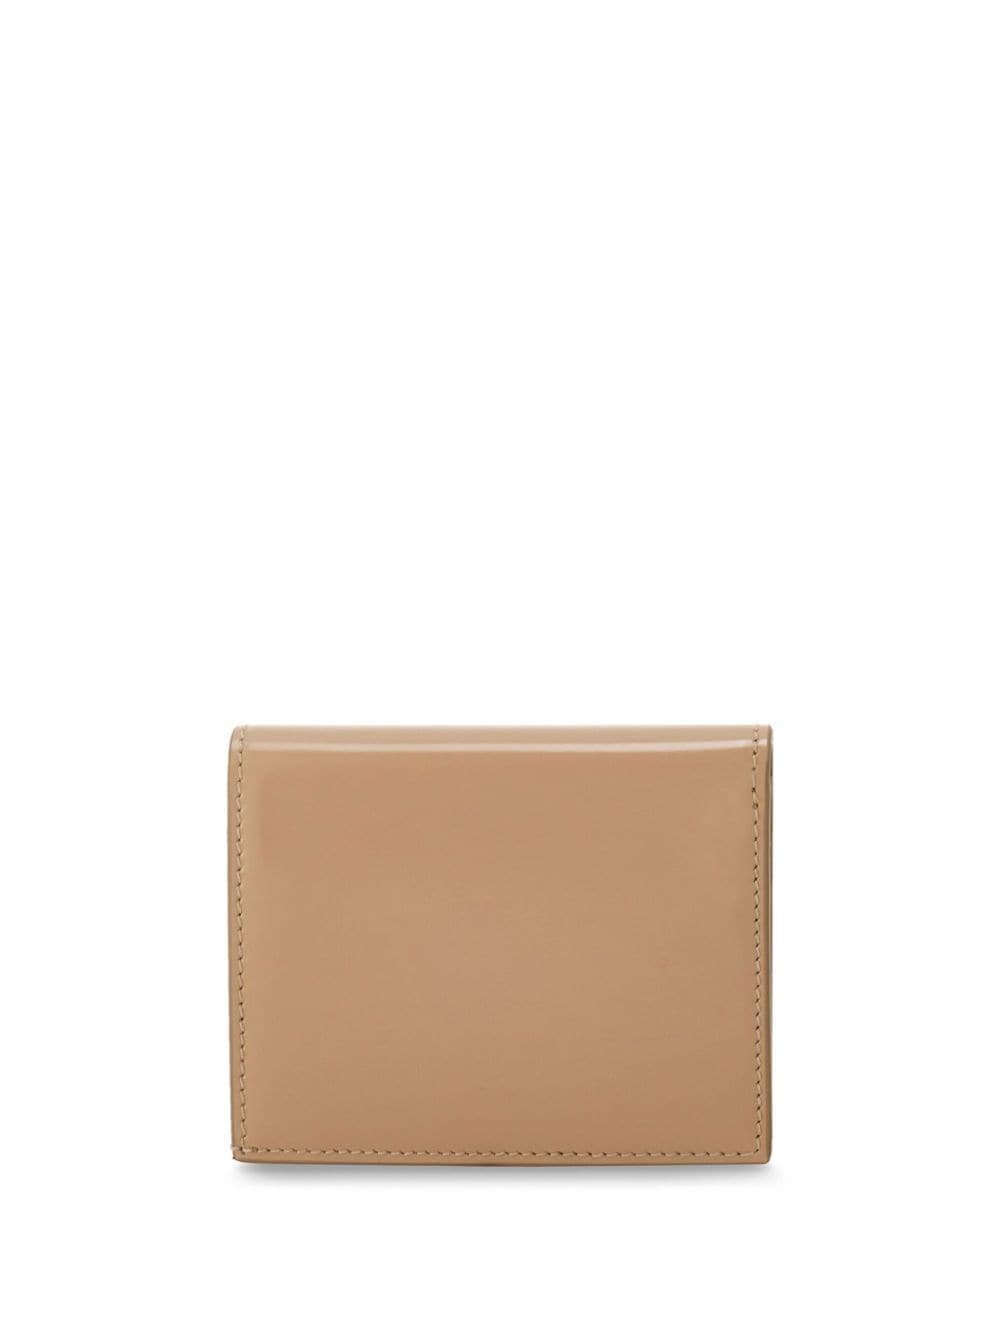 Gancini-buckle leather wallet - 2